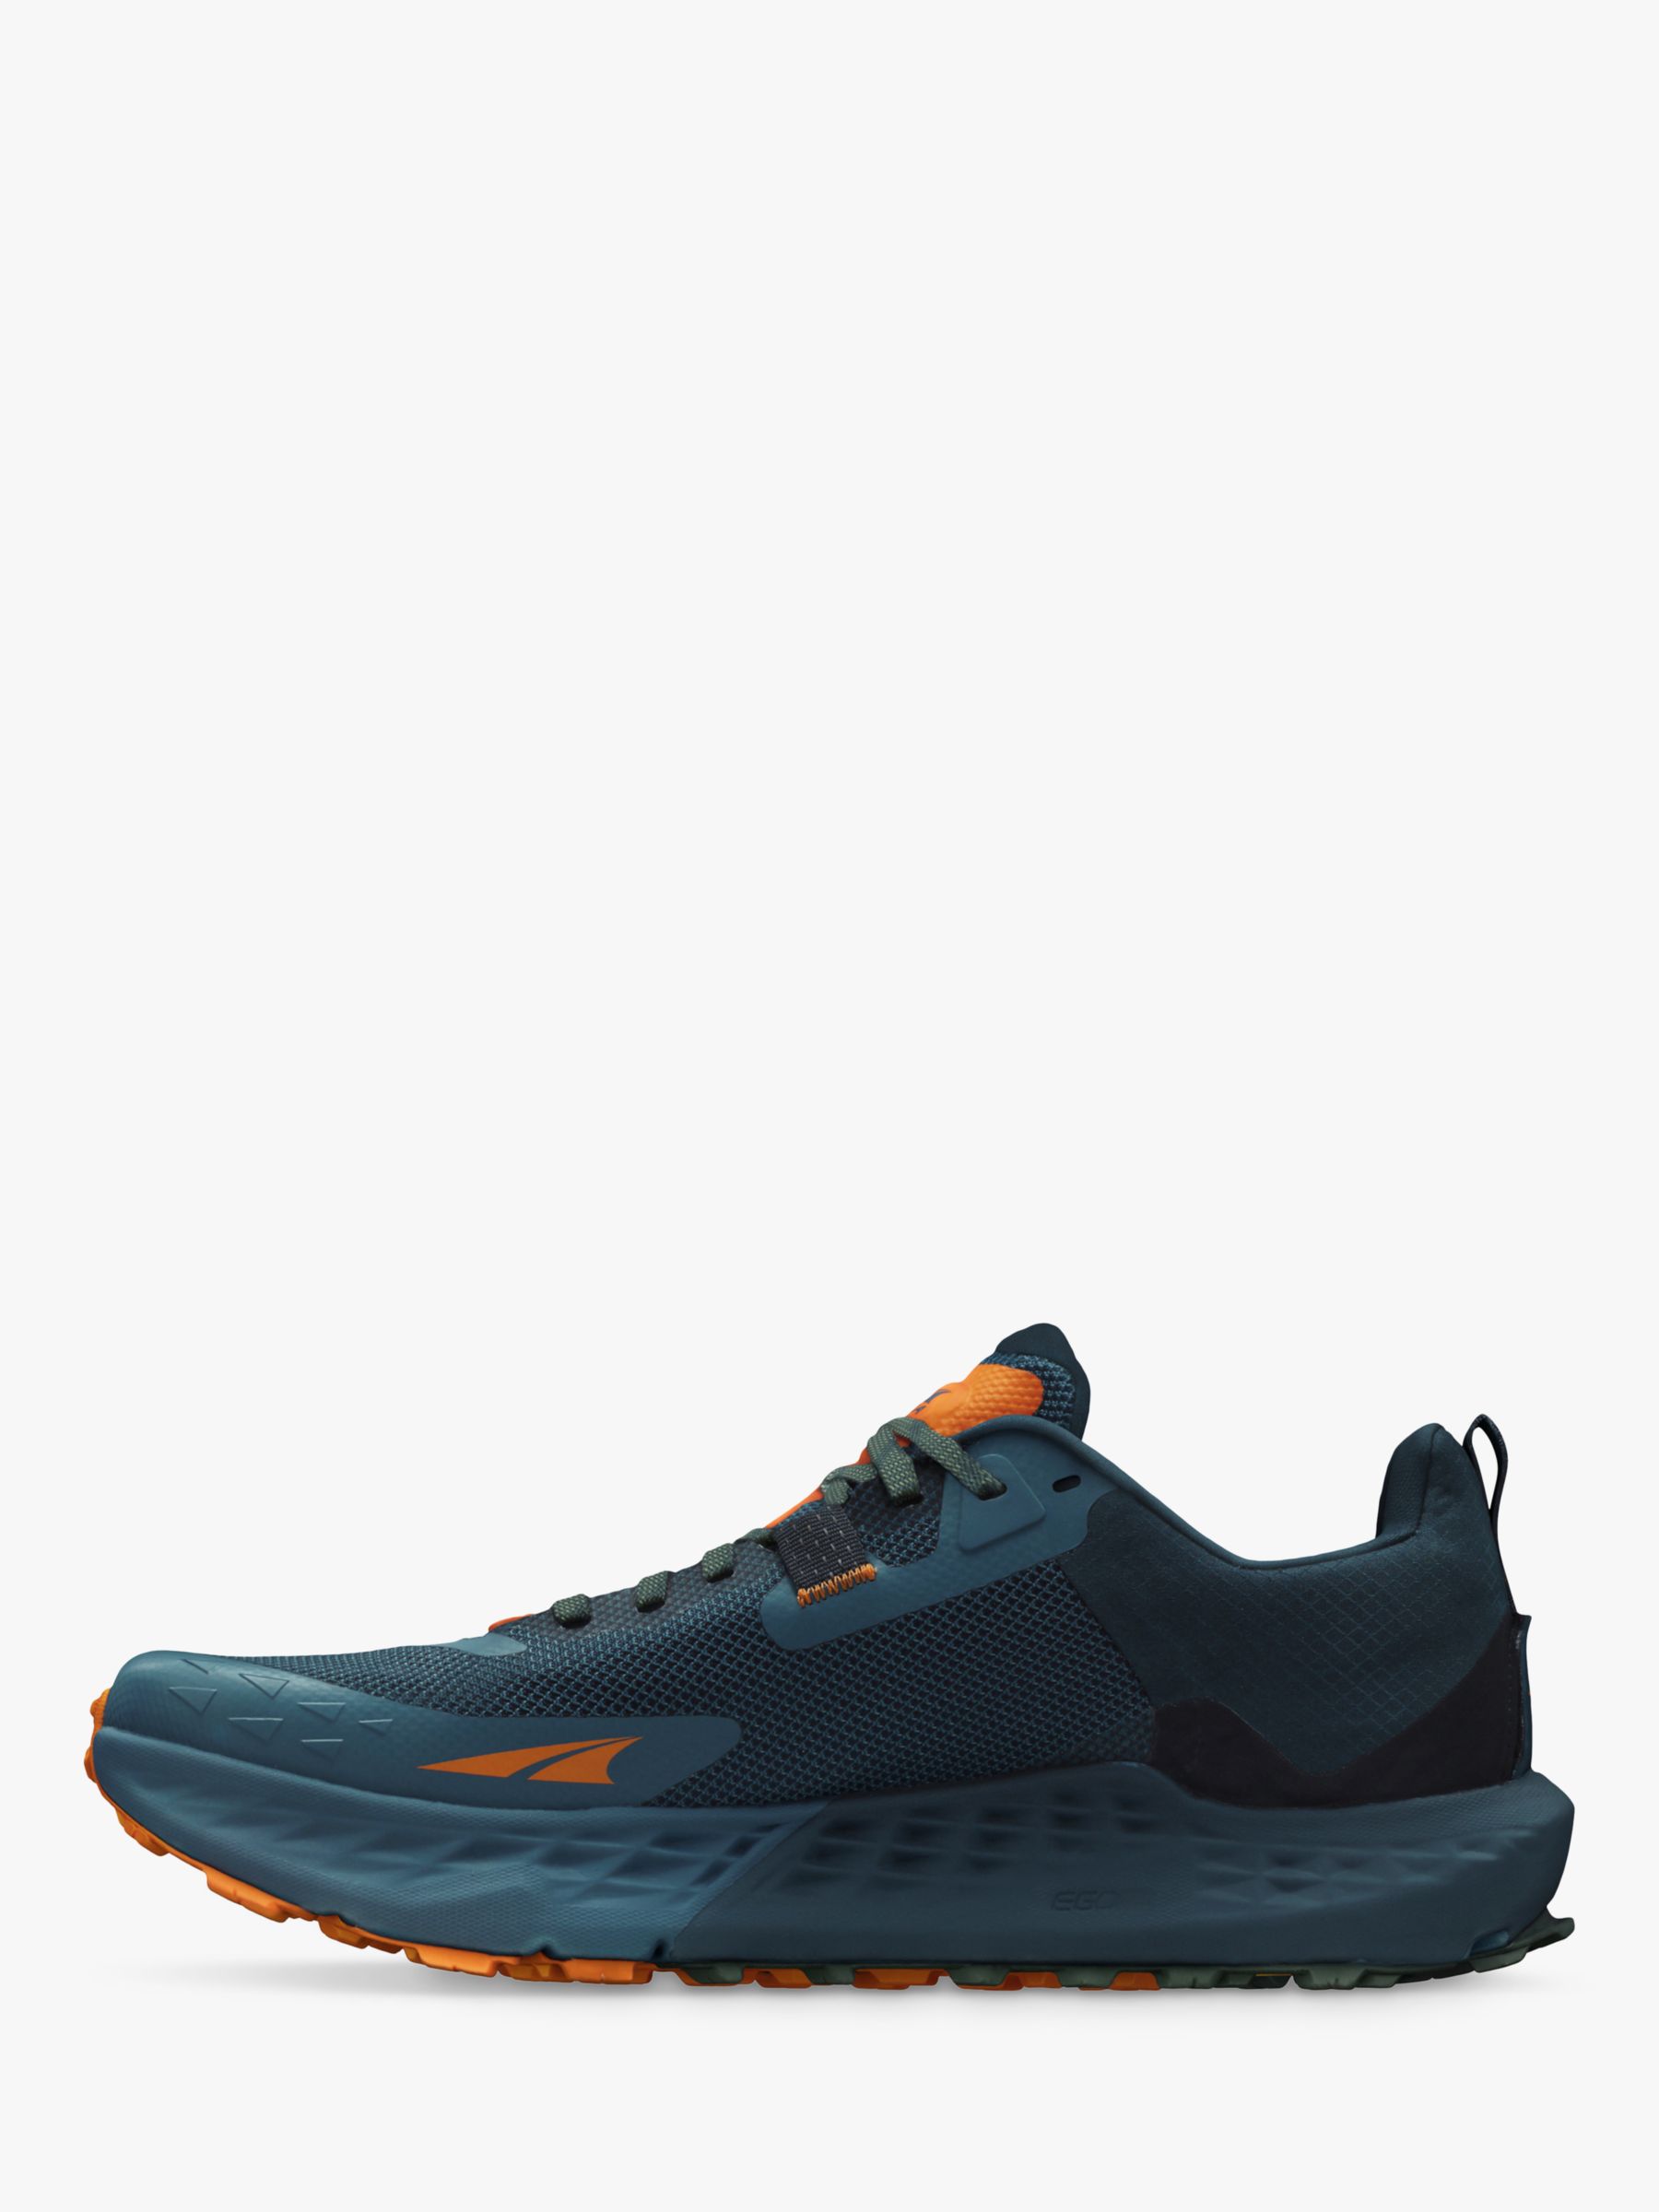 Altra Timp 5 Men's Running Shoes, Blue/Orange, 11